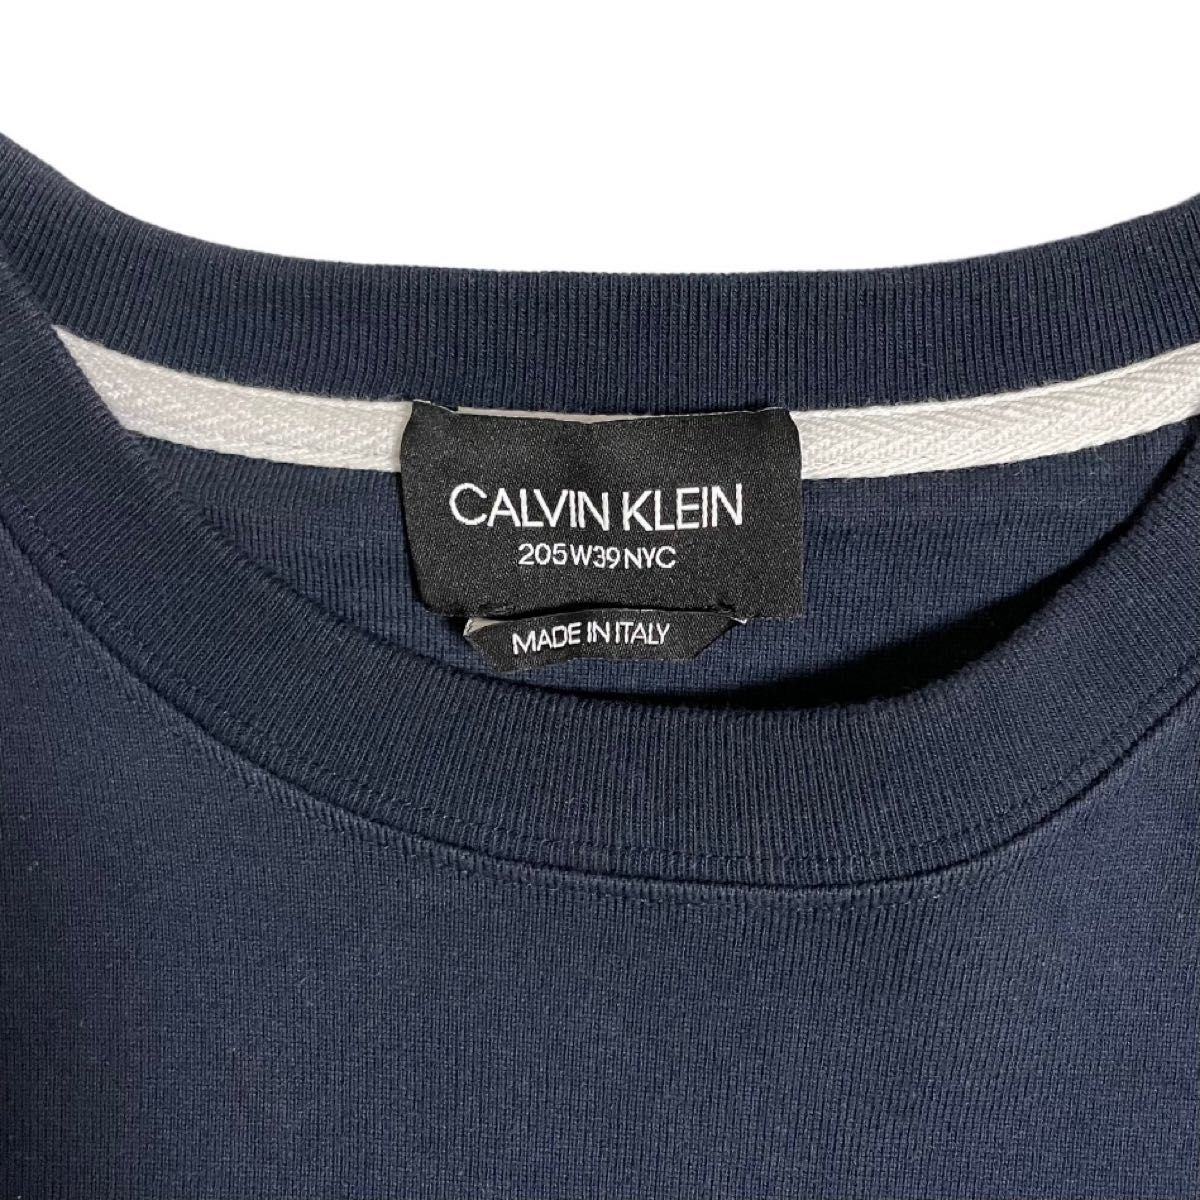 CALVIN KLEIN 205W39NYC RAF SIMONS期 刺繍カットソー Tシャツ